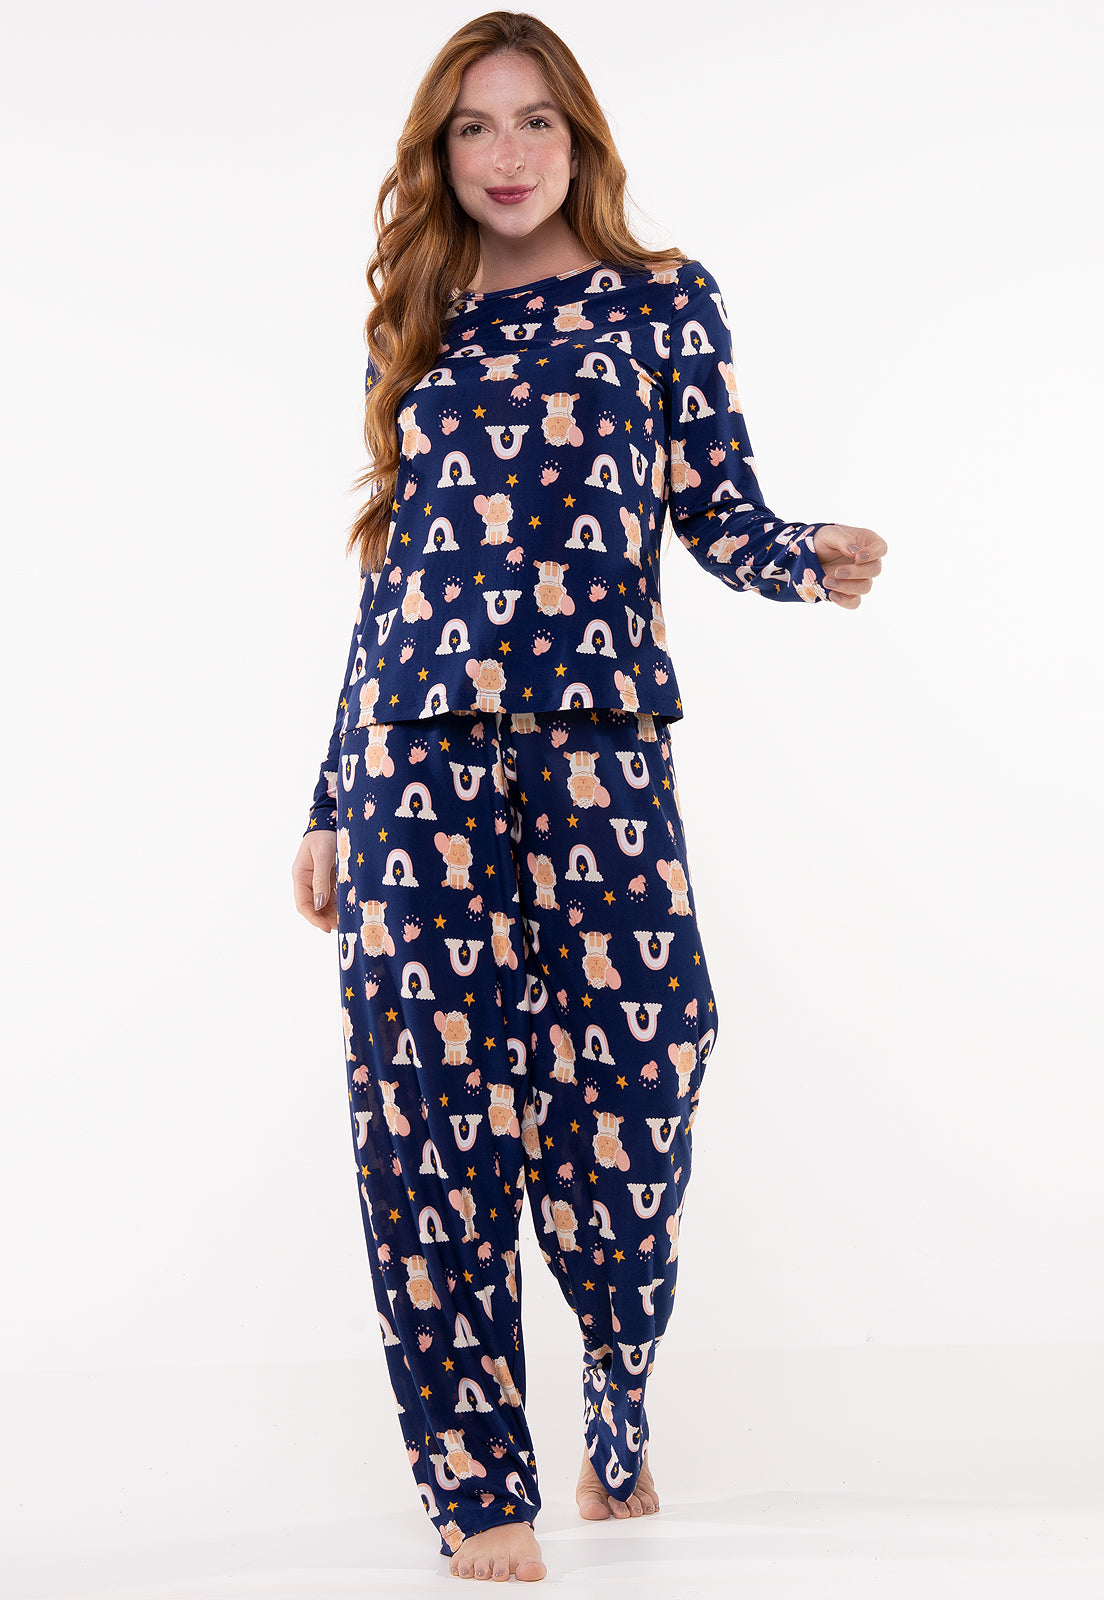 Pijama Feminino Estampado Liganete Adulto Longo Inverno Frio Conforto Azul 197